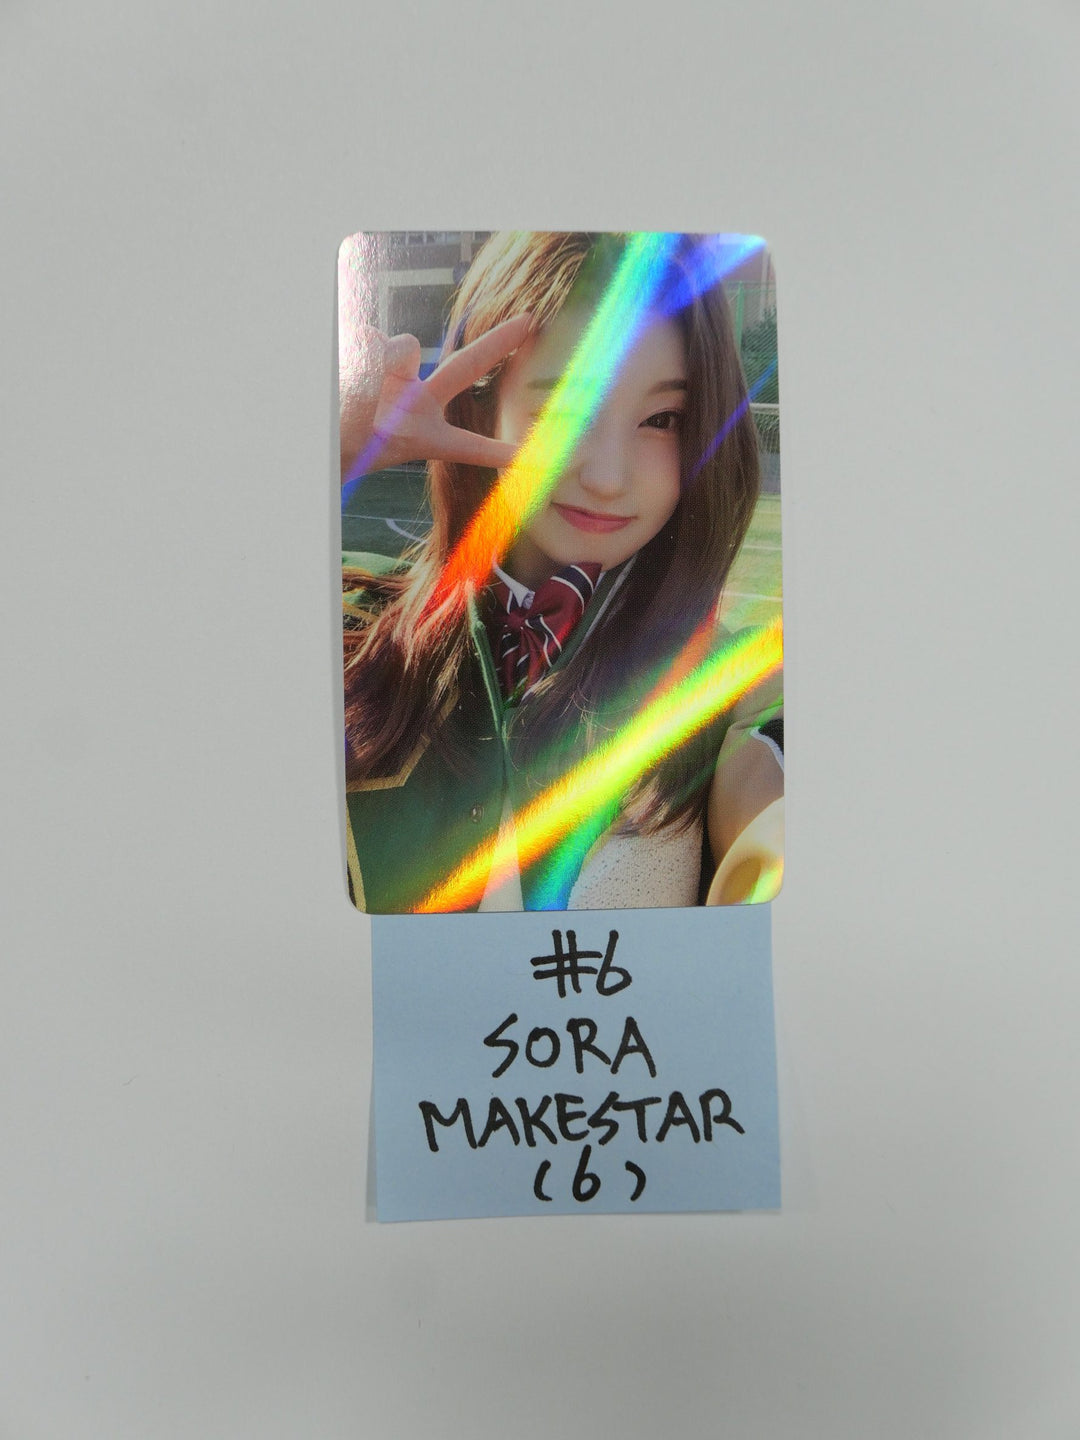 Woo!ah! "Let's Catch The Stars!" - Makestar Fansign Event Hologram Photocard